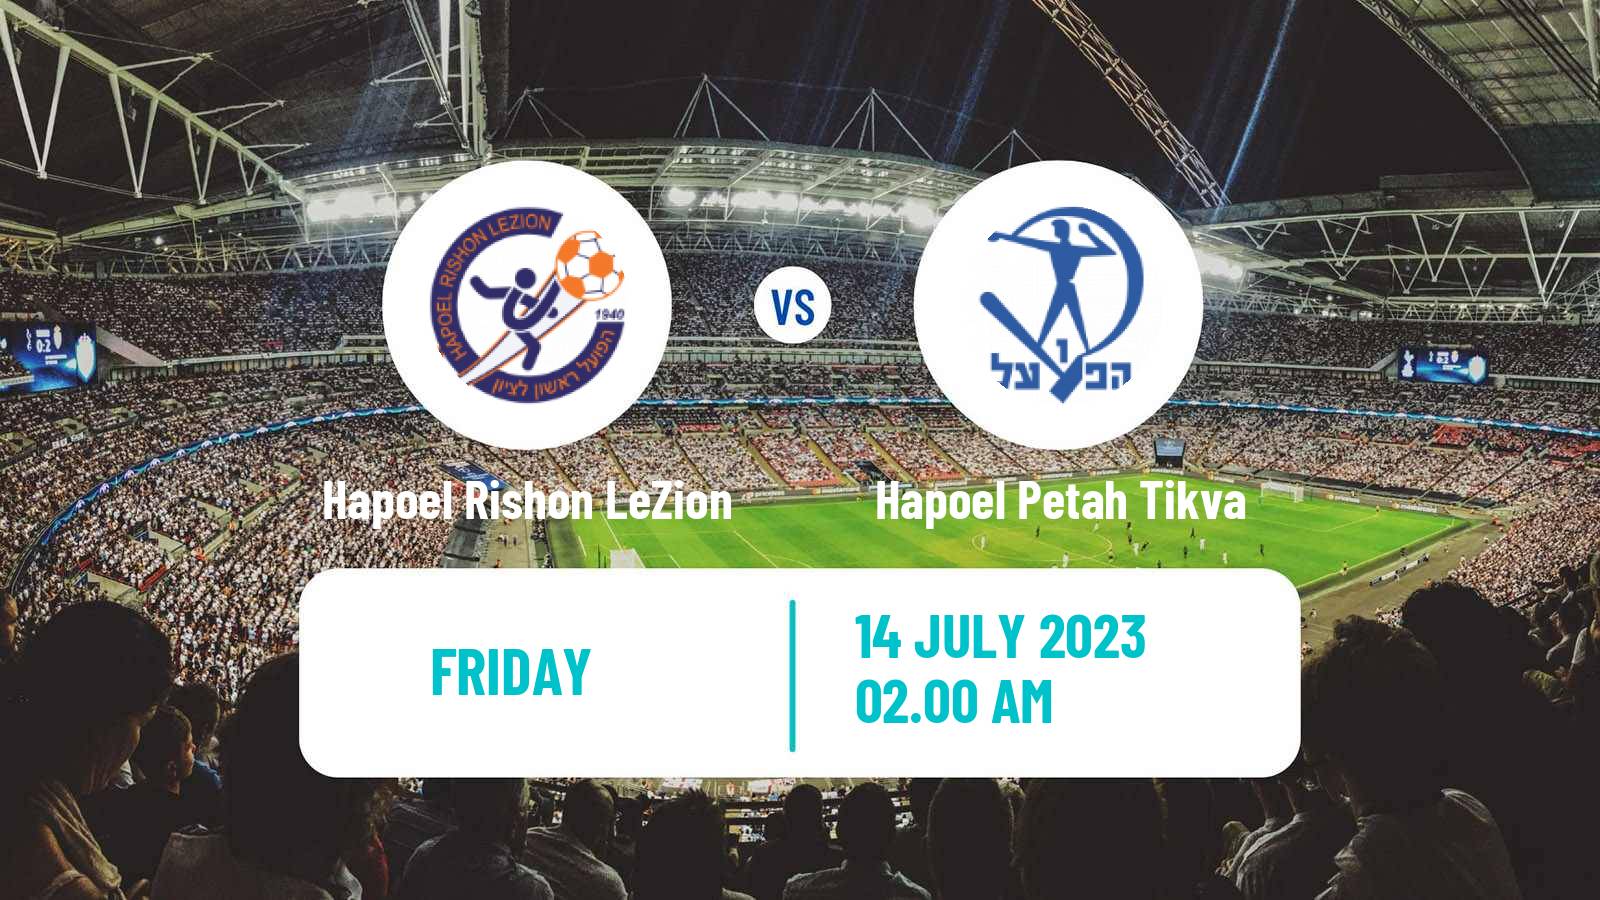 Soccer Club Friendly Hapoel Rishon LeZion - Hapoel Petah Tikva